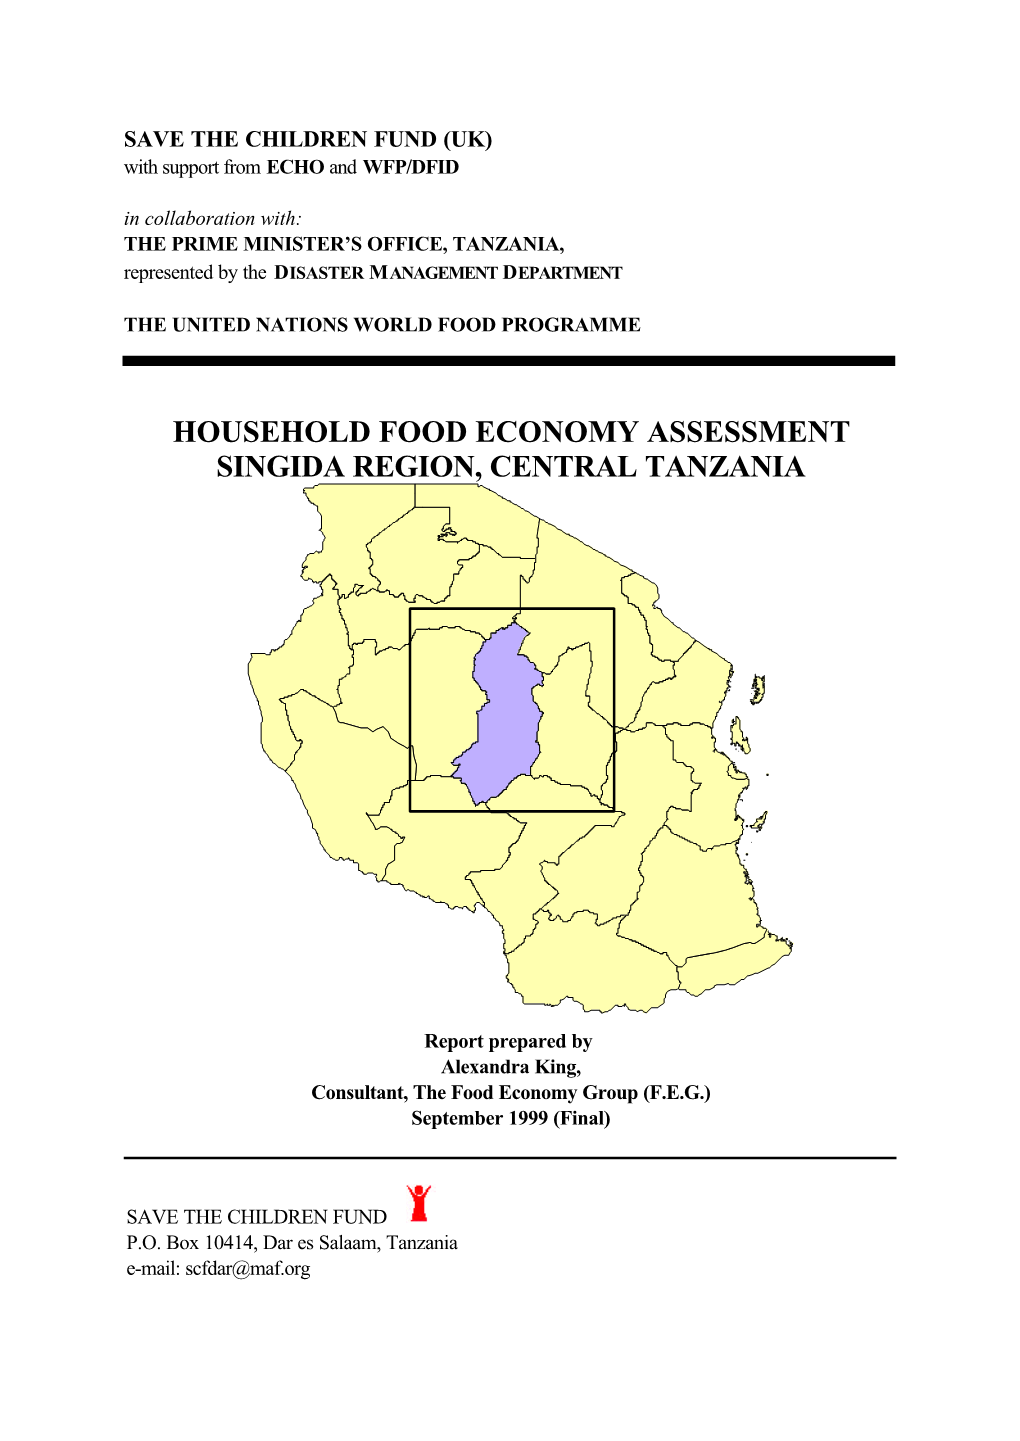 Household Food Economy Assessment Singida Region, Central Tanzania